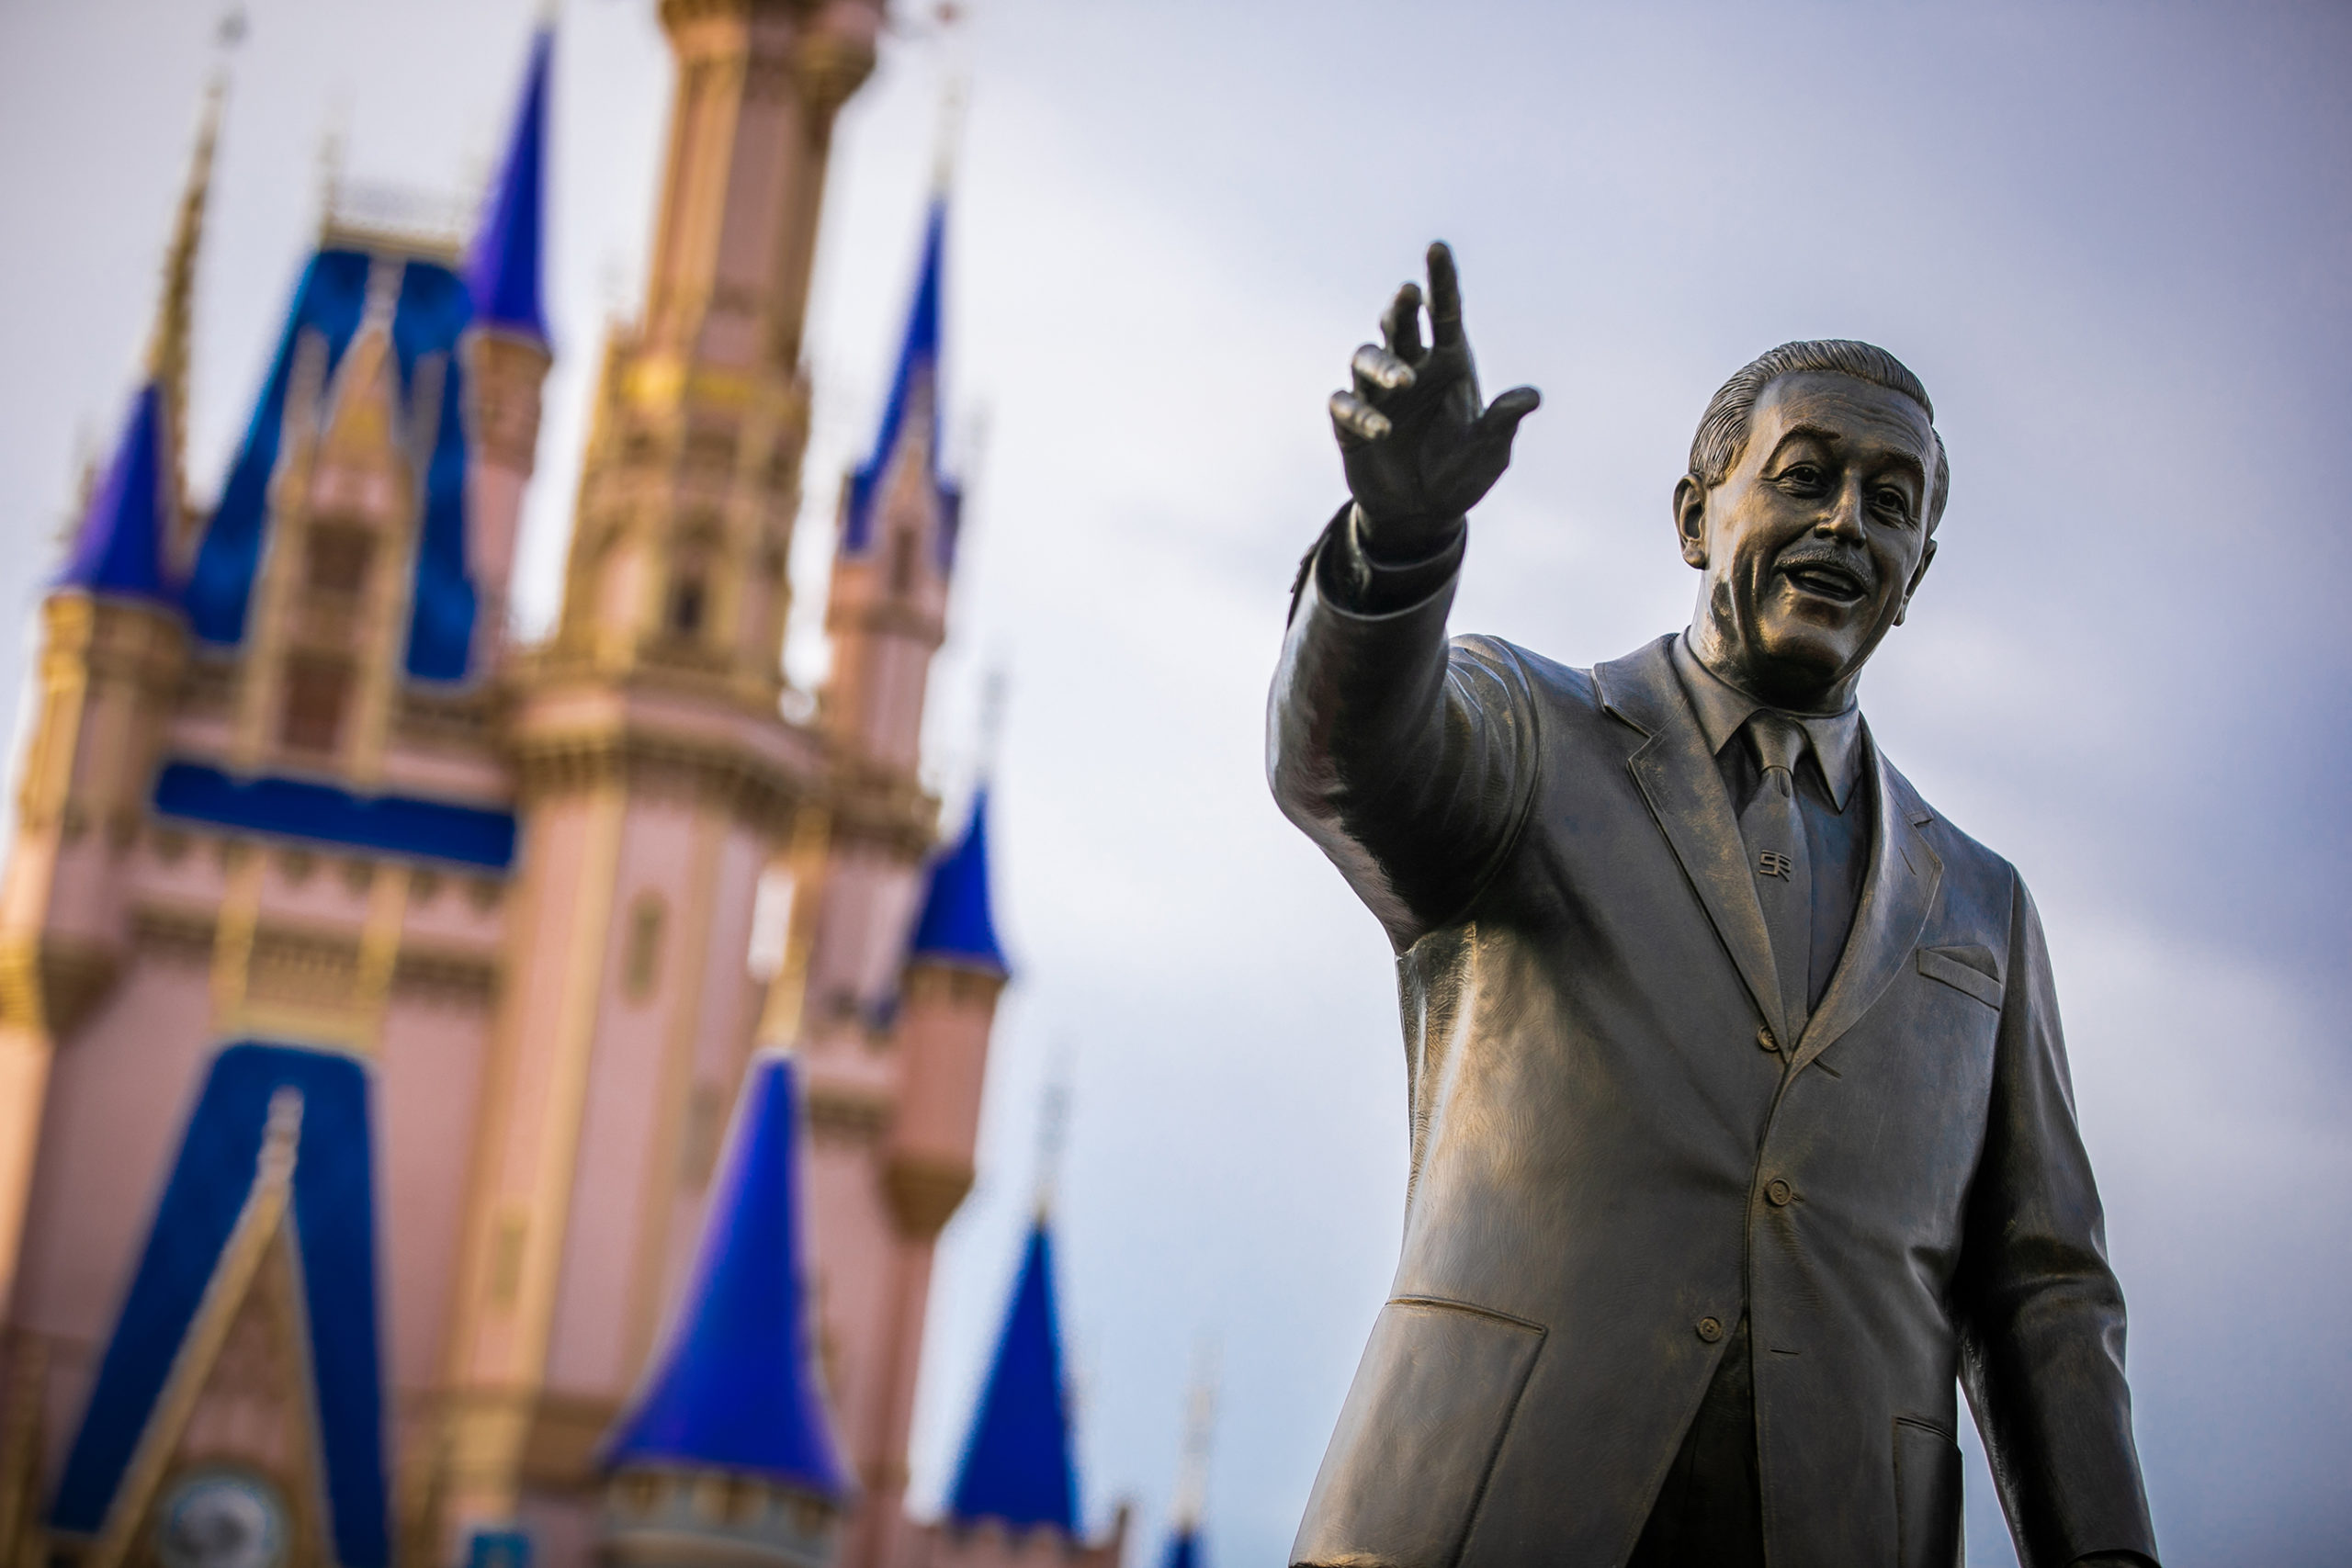 Statue of Walt Disney in the Magic Kingdom